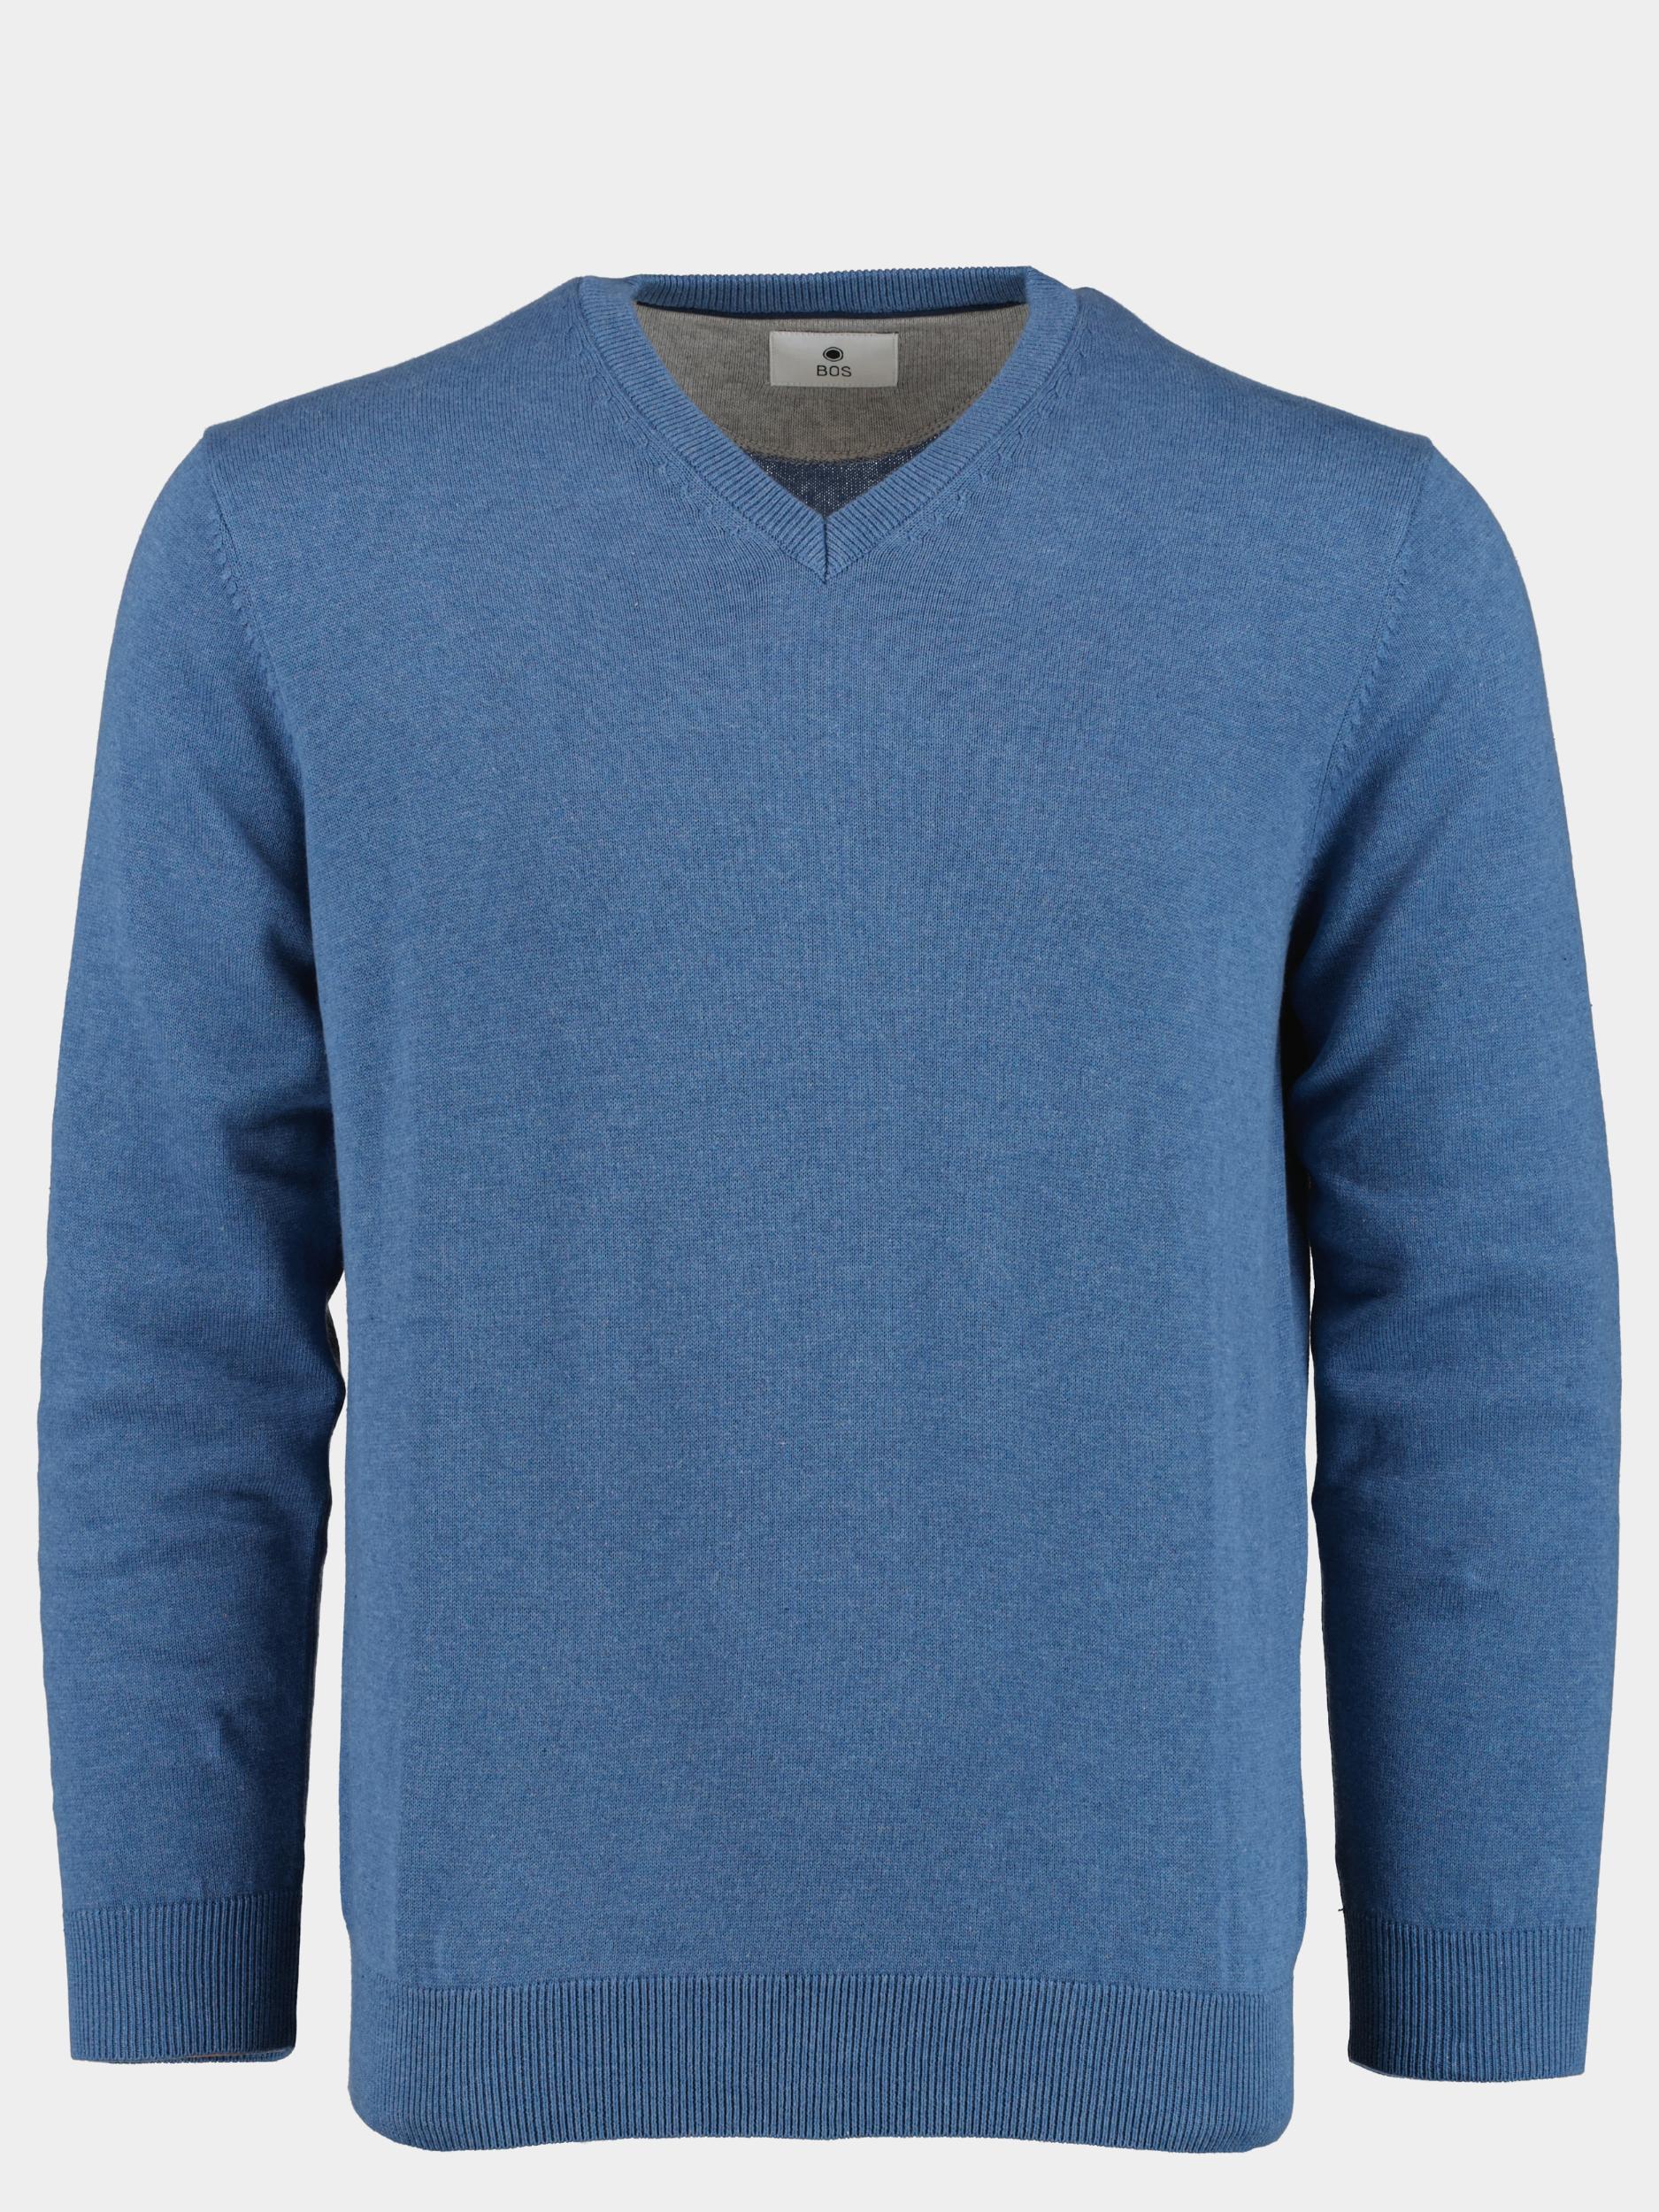 Bos Bright Blue Pullover cotton regular fit 418100cct-13/635